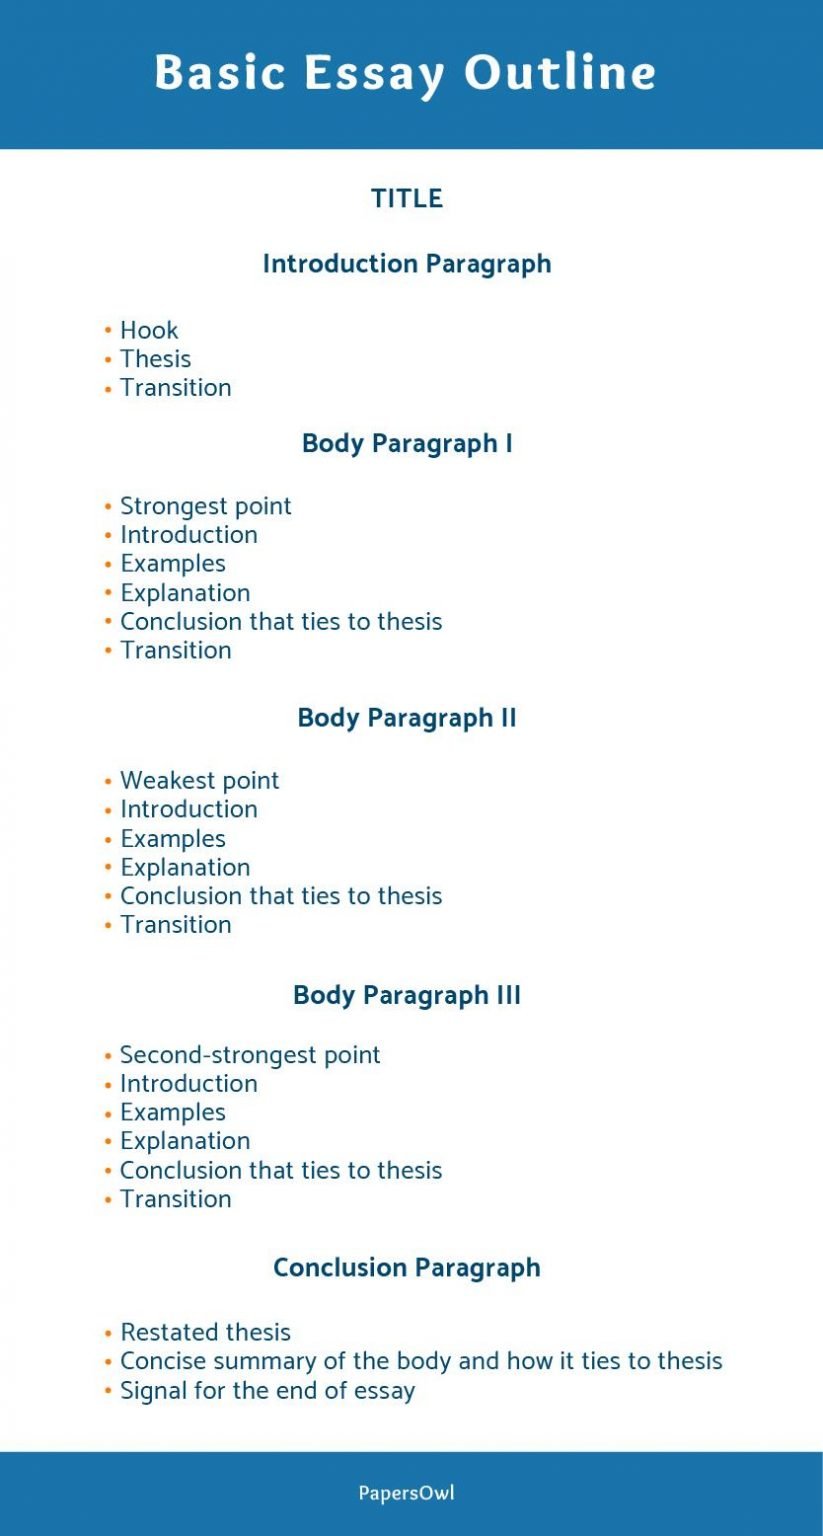 parts of the essay pdf